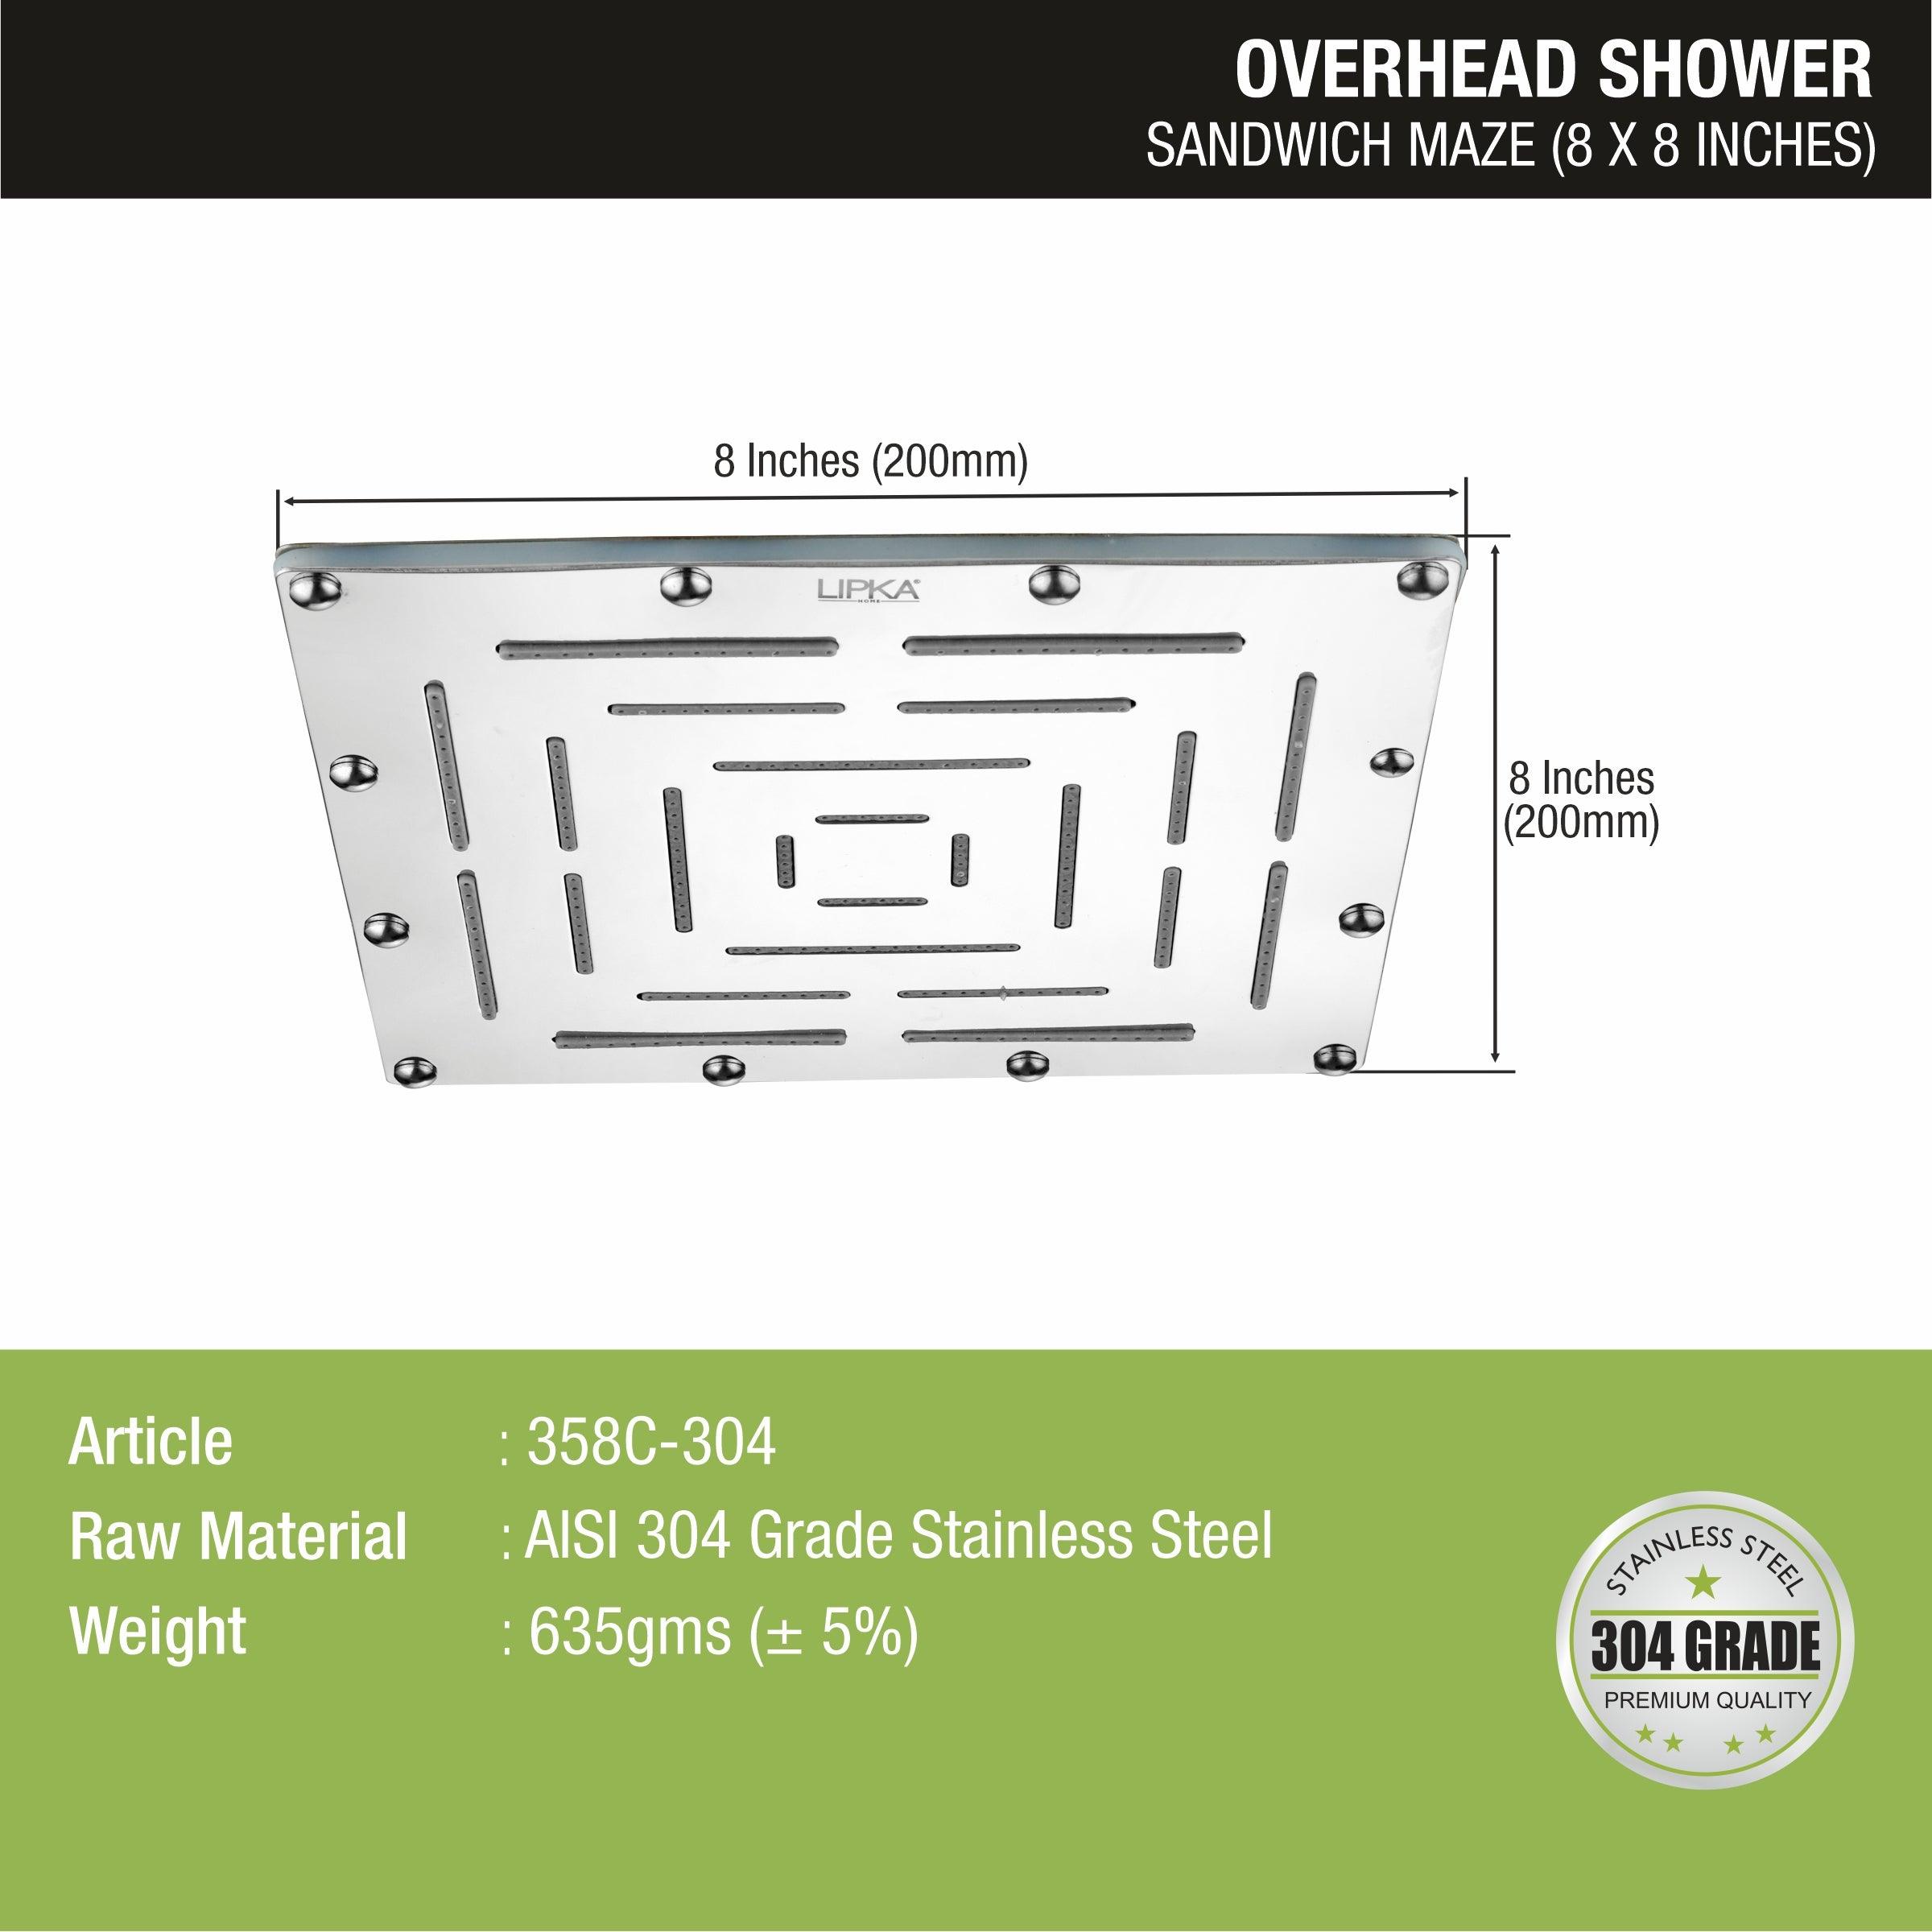 Sandwich Maze 304-Grade Overhead Rain Shower (8 x 8 Inches) sizes and dimension